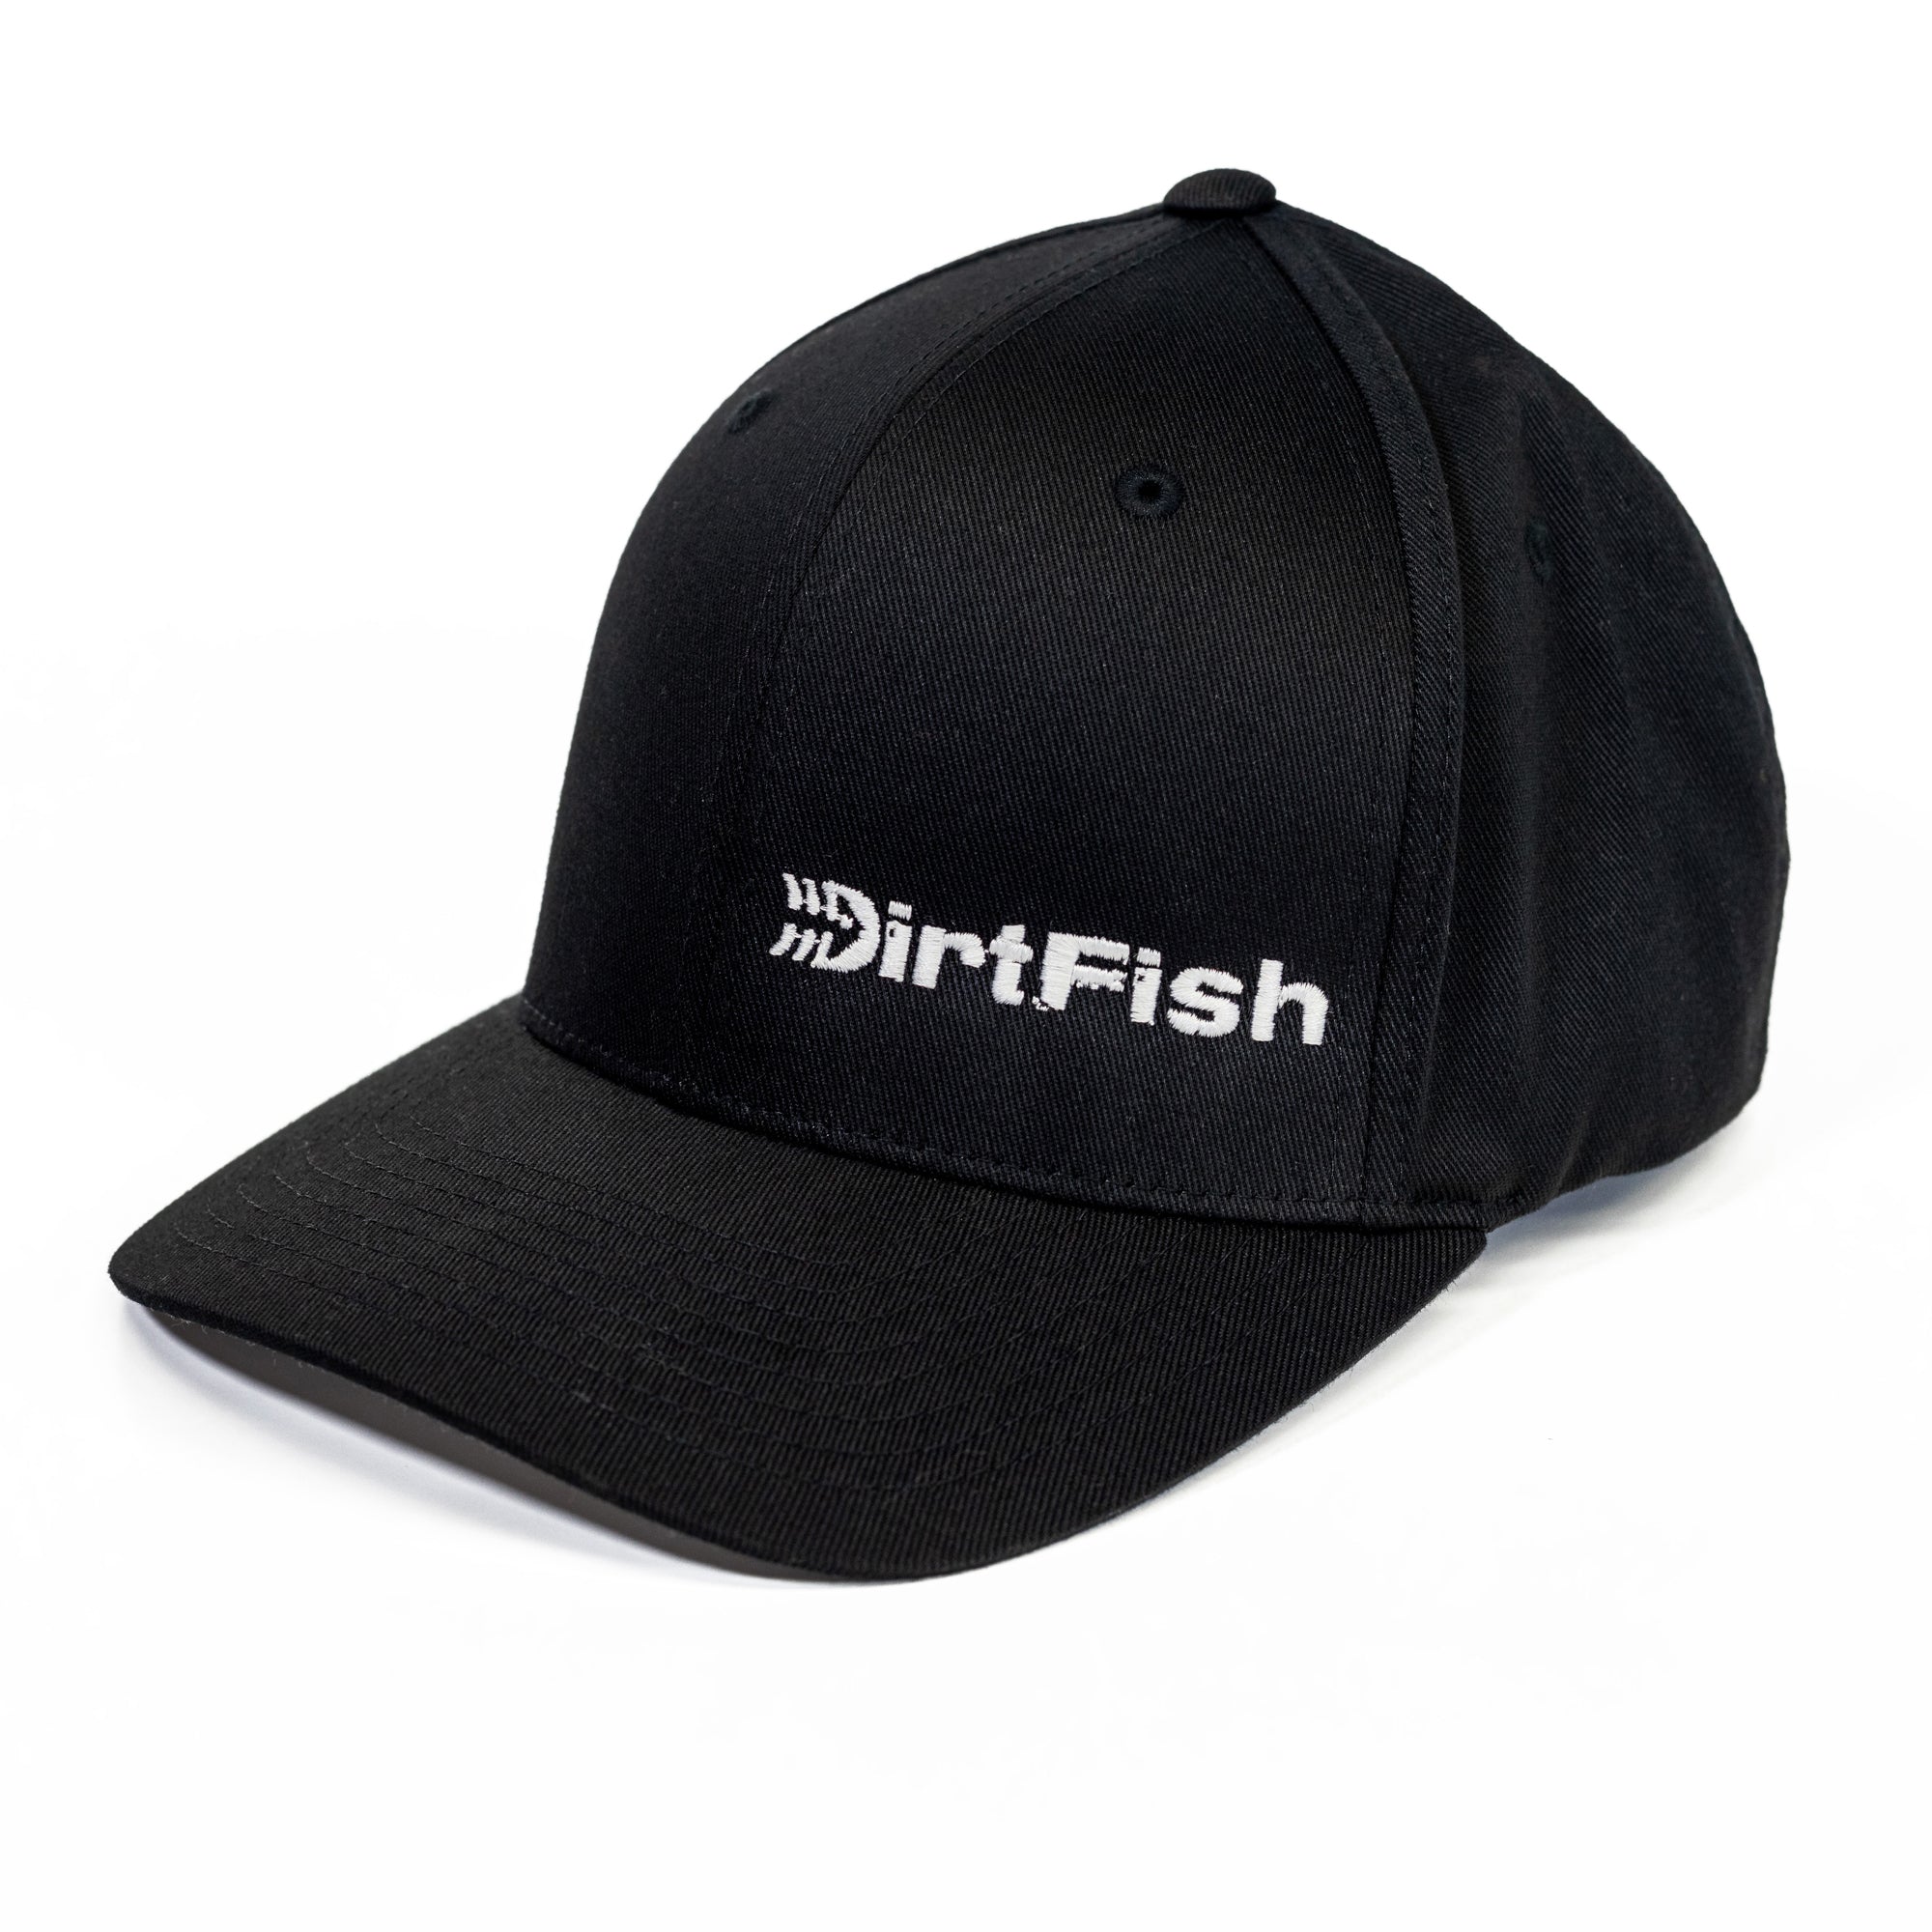 Skillfish - Black flexfit Cap - Tiny Perch Fishing Black Flexfit @ Hatstore